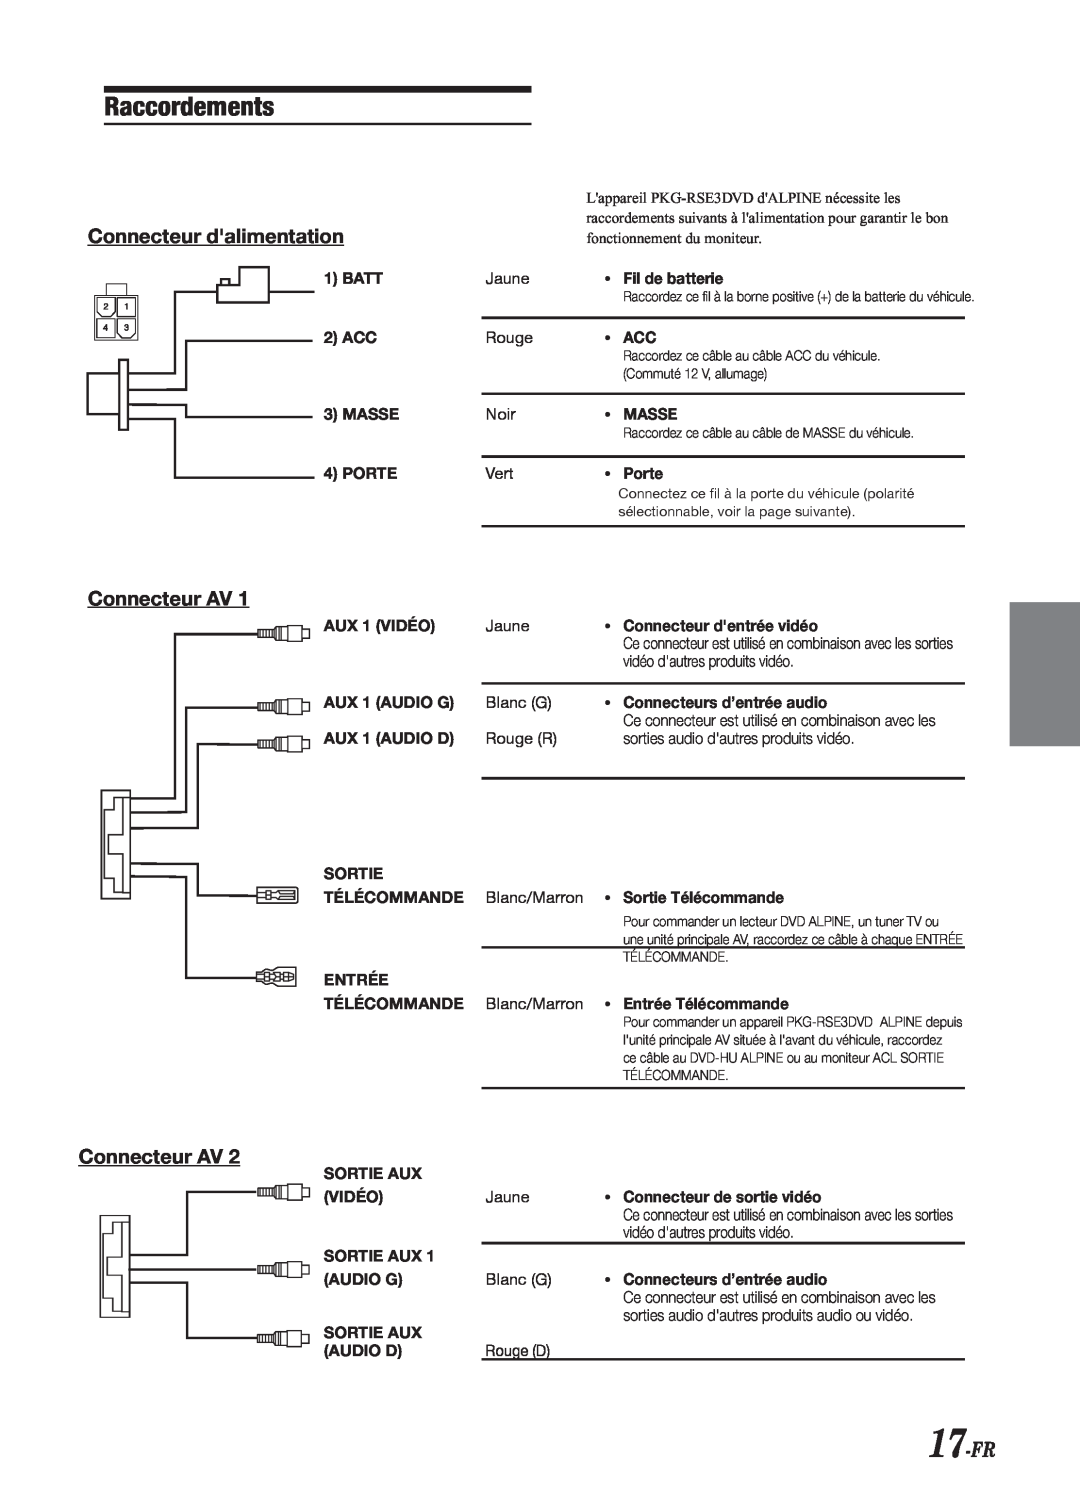 Alpine PKG-RSE3DVD installation manual Raccordements, Connecteur dalimentation, Connecteur AV, 17-FR 